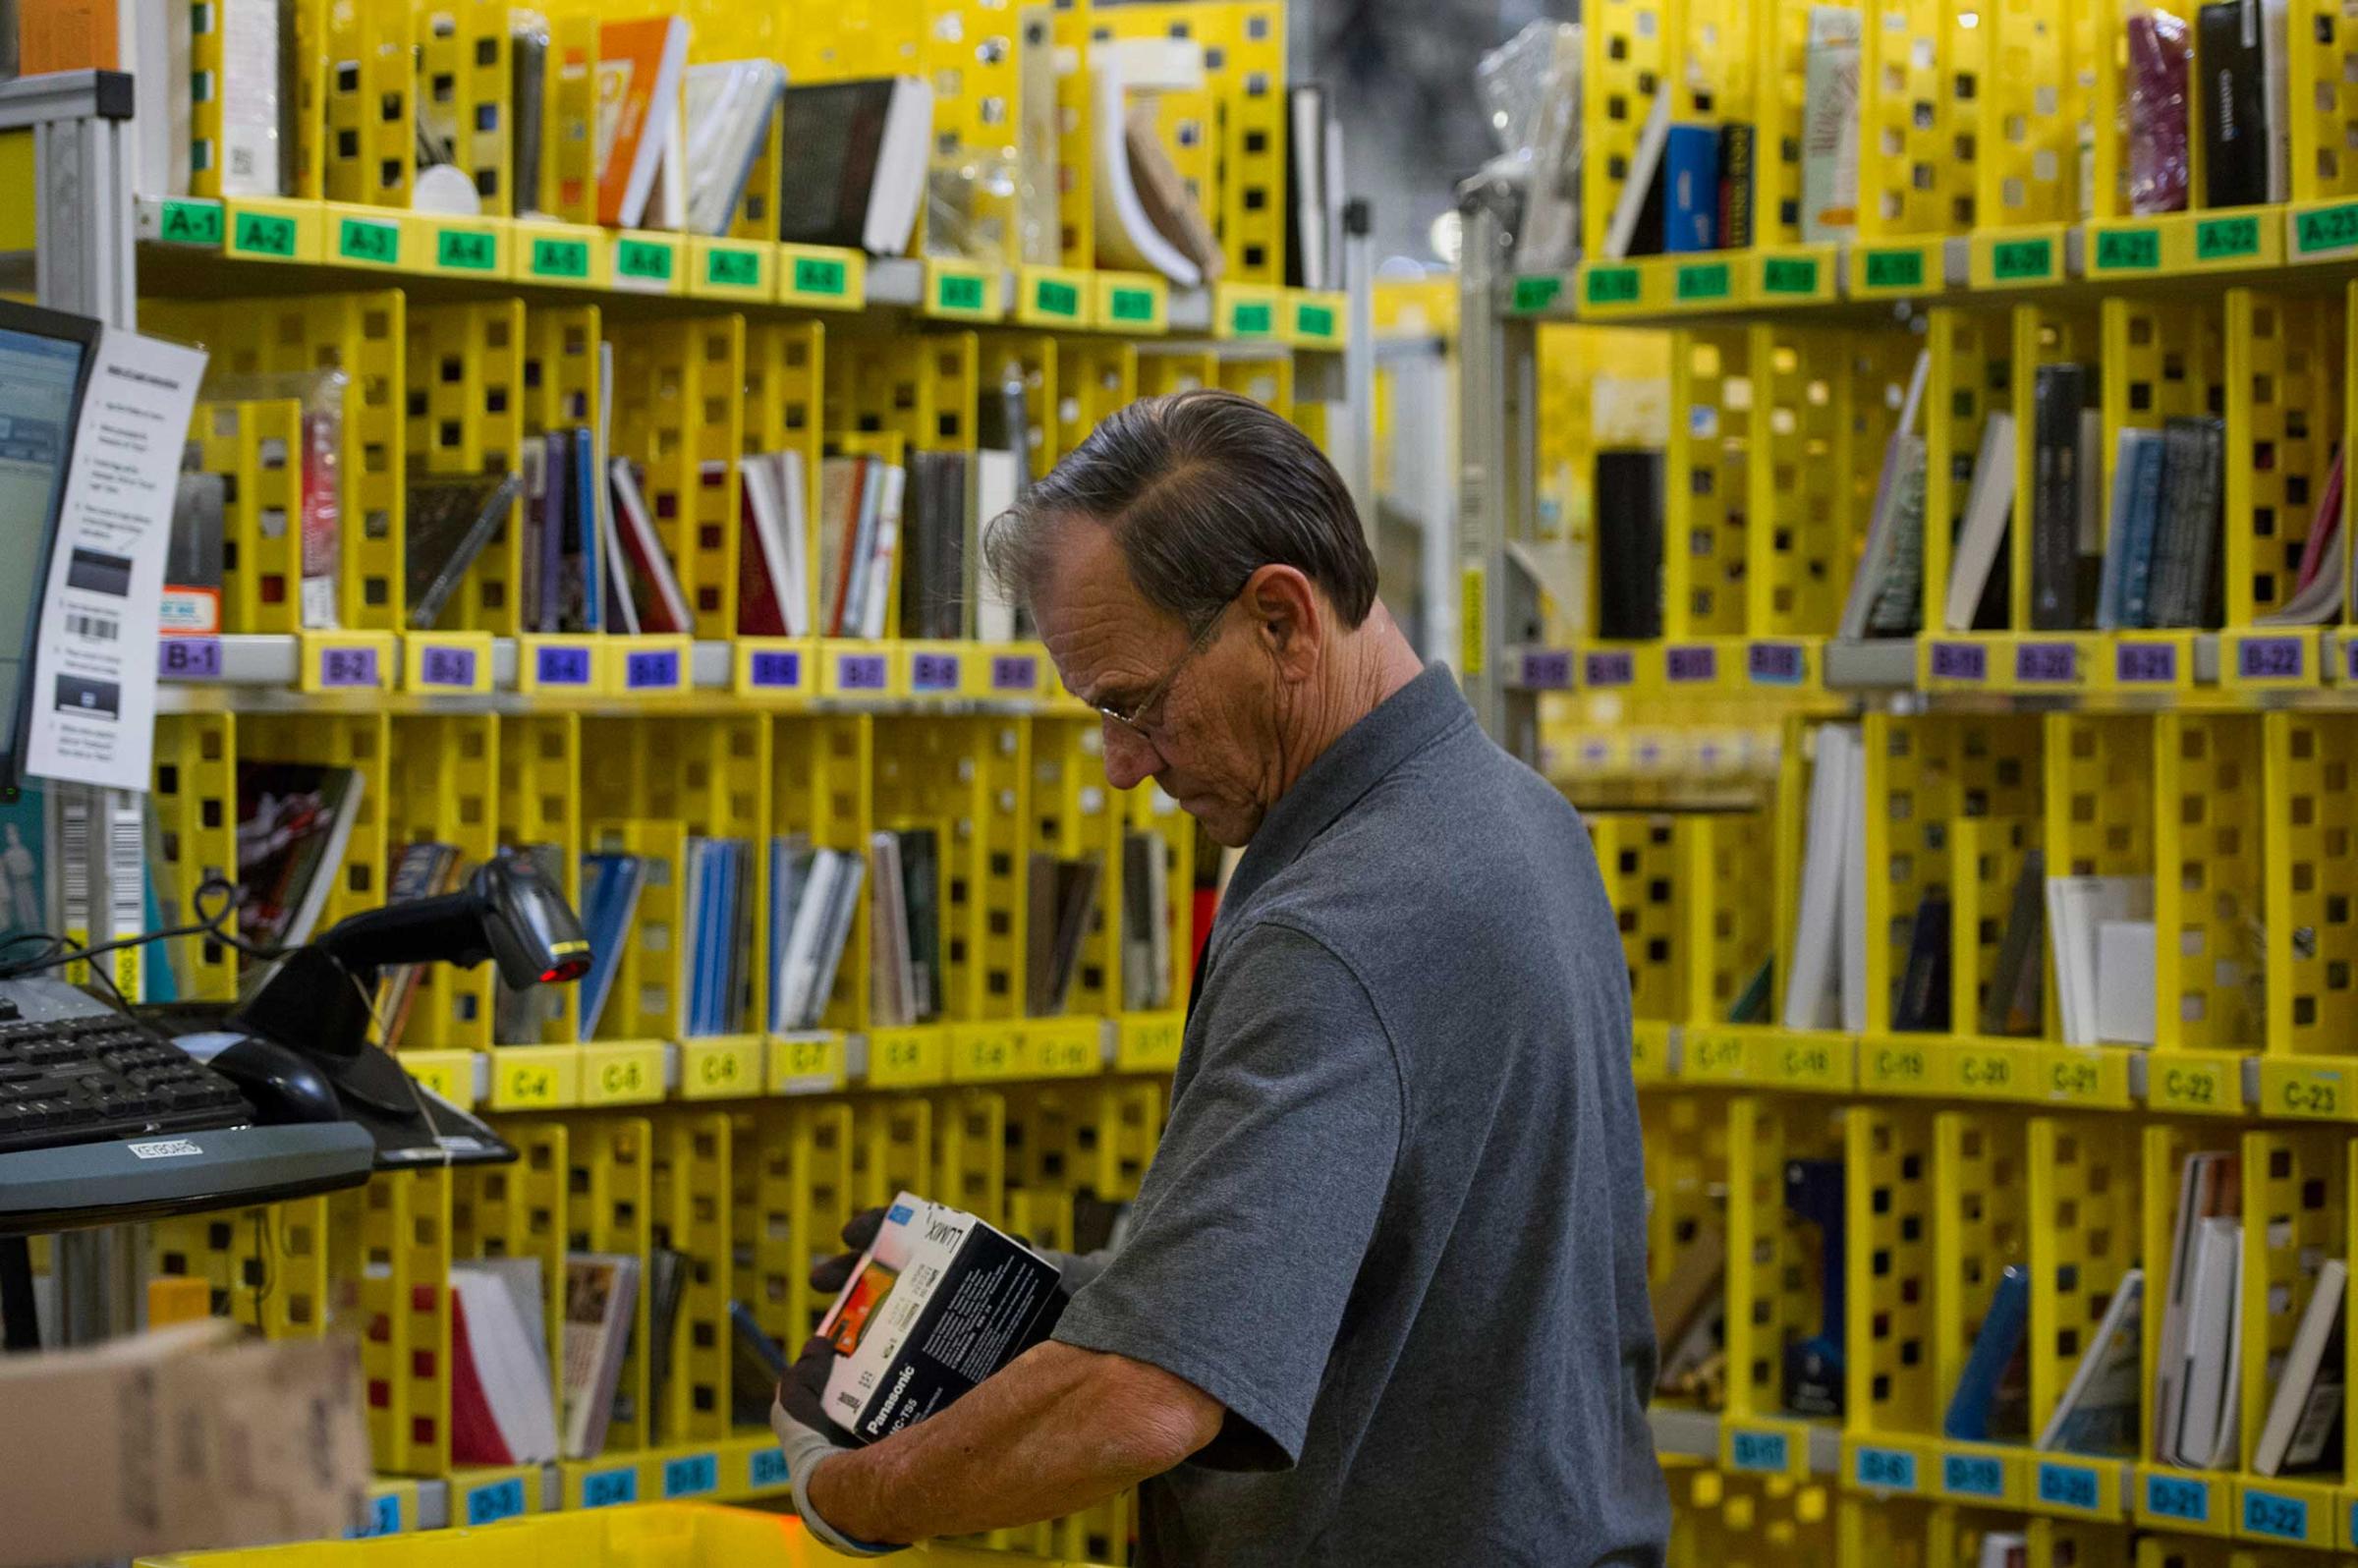 An employee packs merchandise for shipment at the Amazon.com Inc. fulfillment center in Phoenix, Arizona, Dec. 2, 2013.